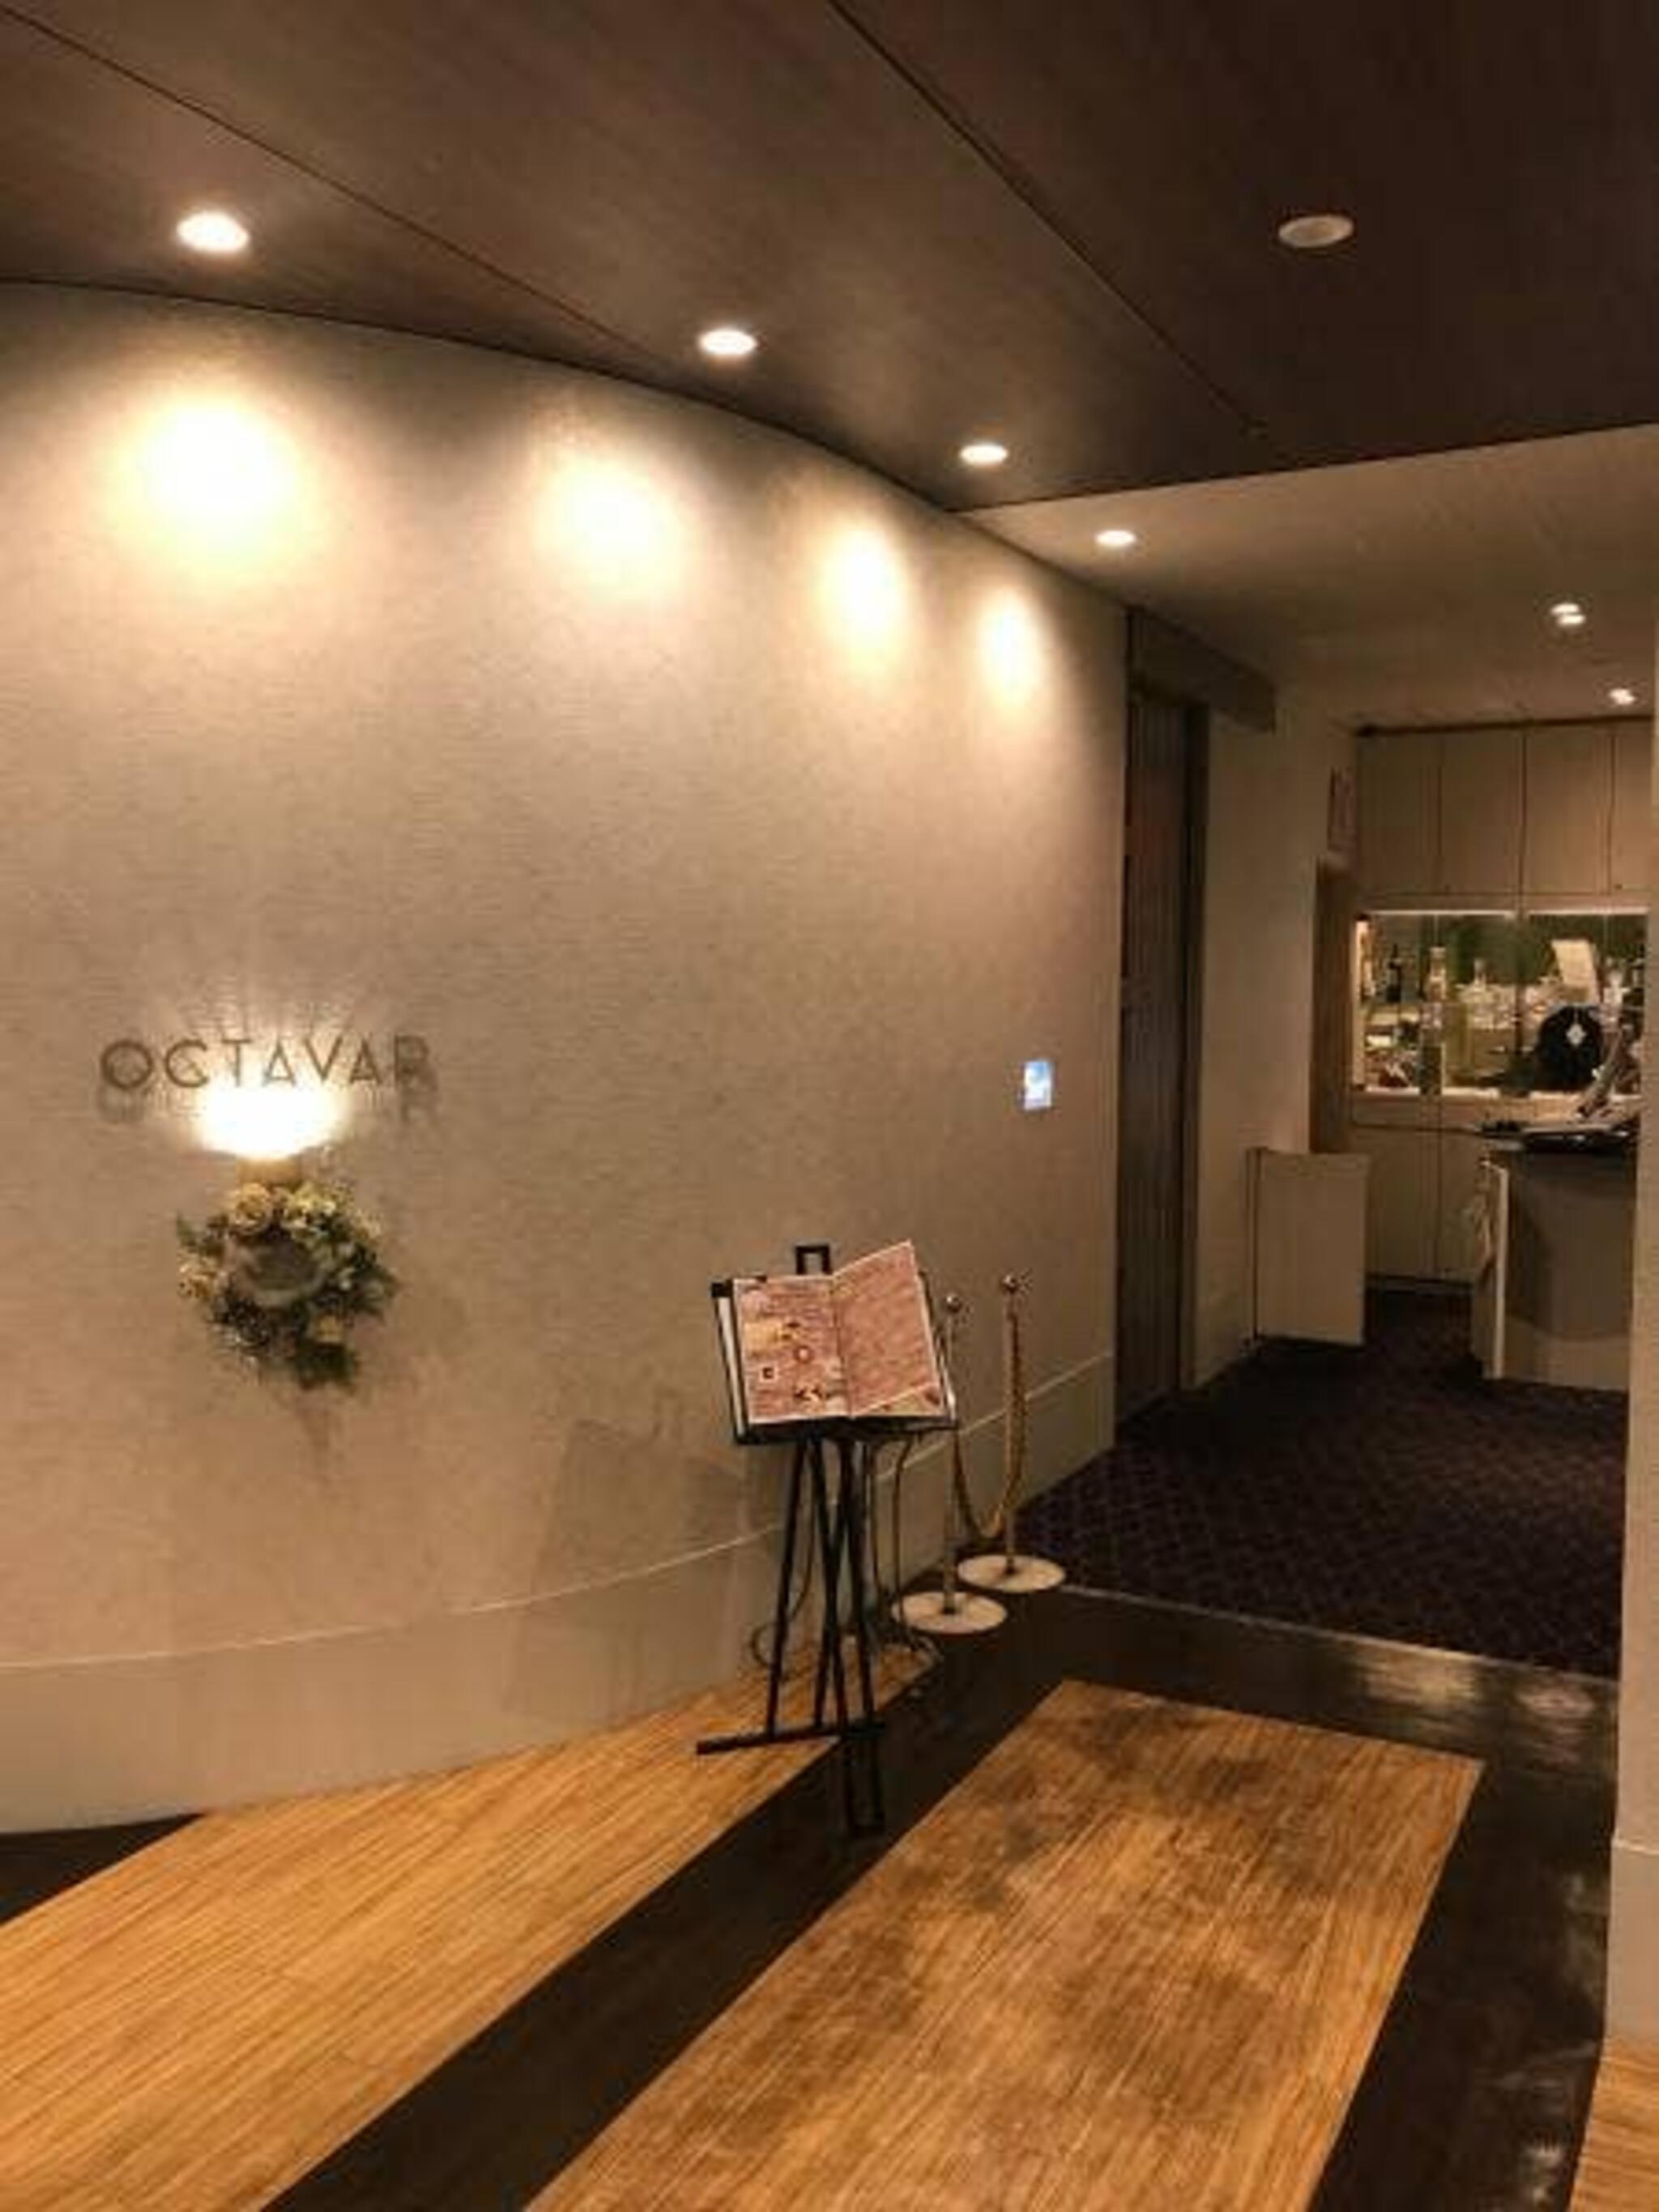 Octavar/ホテル京阪京都グランデの代表写真9